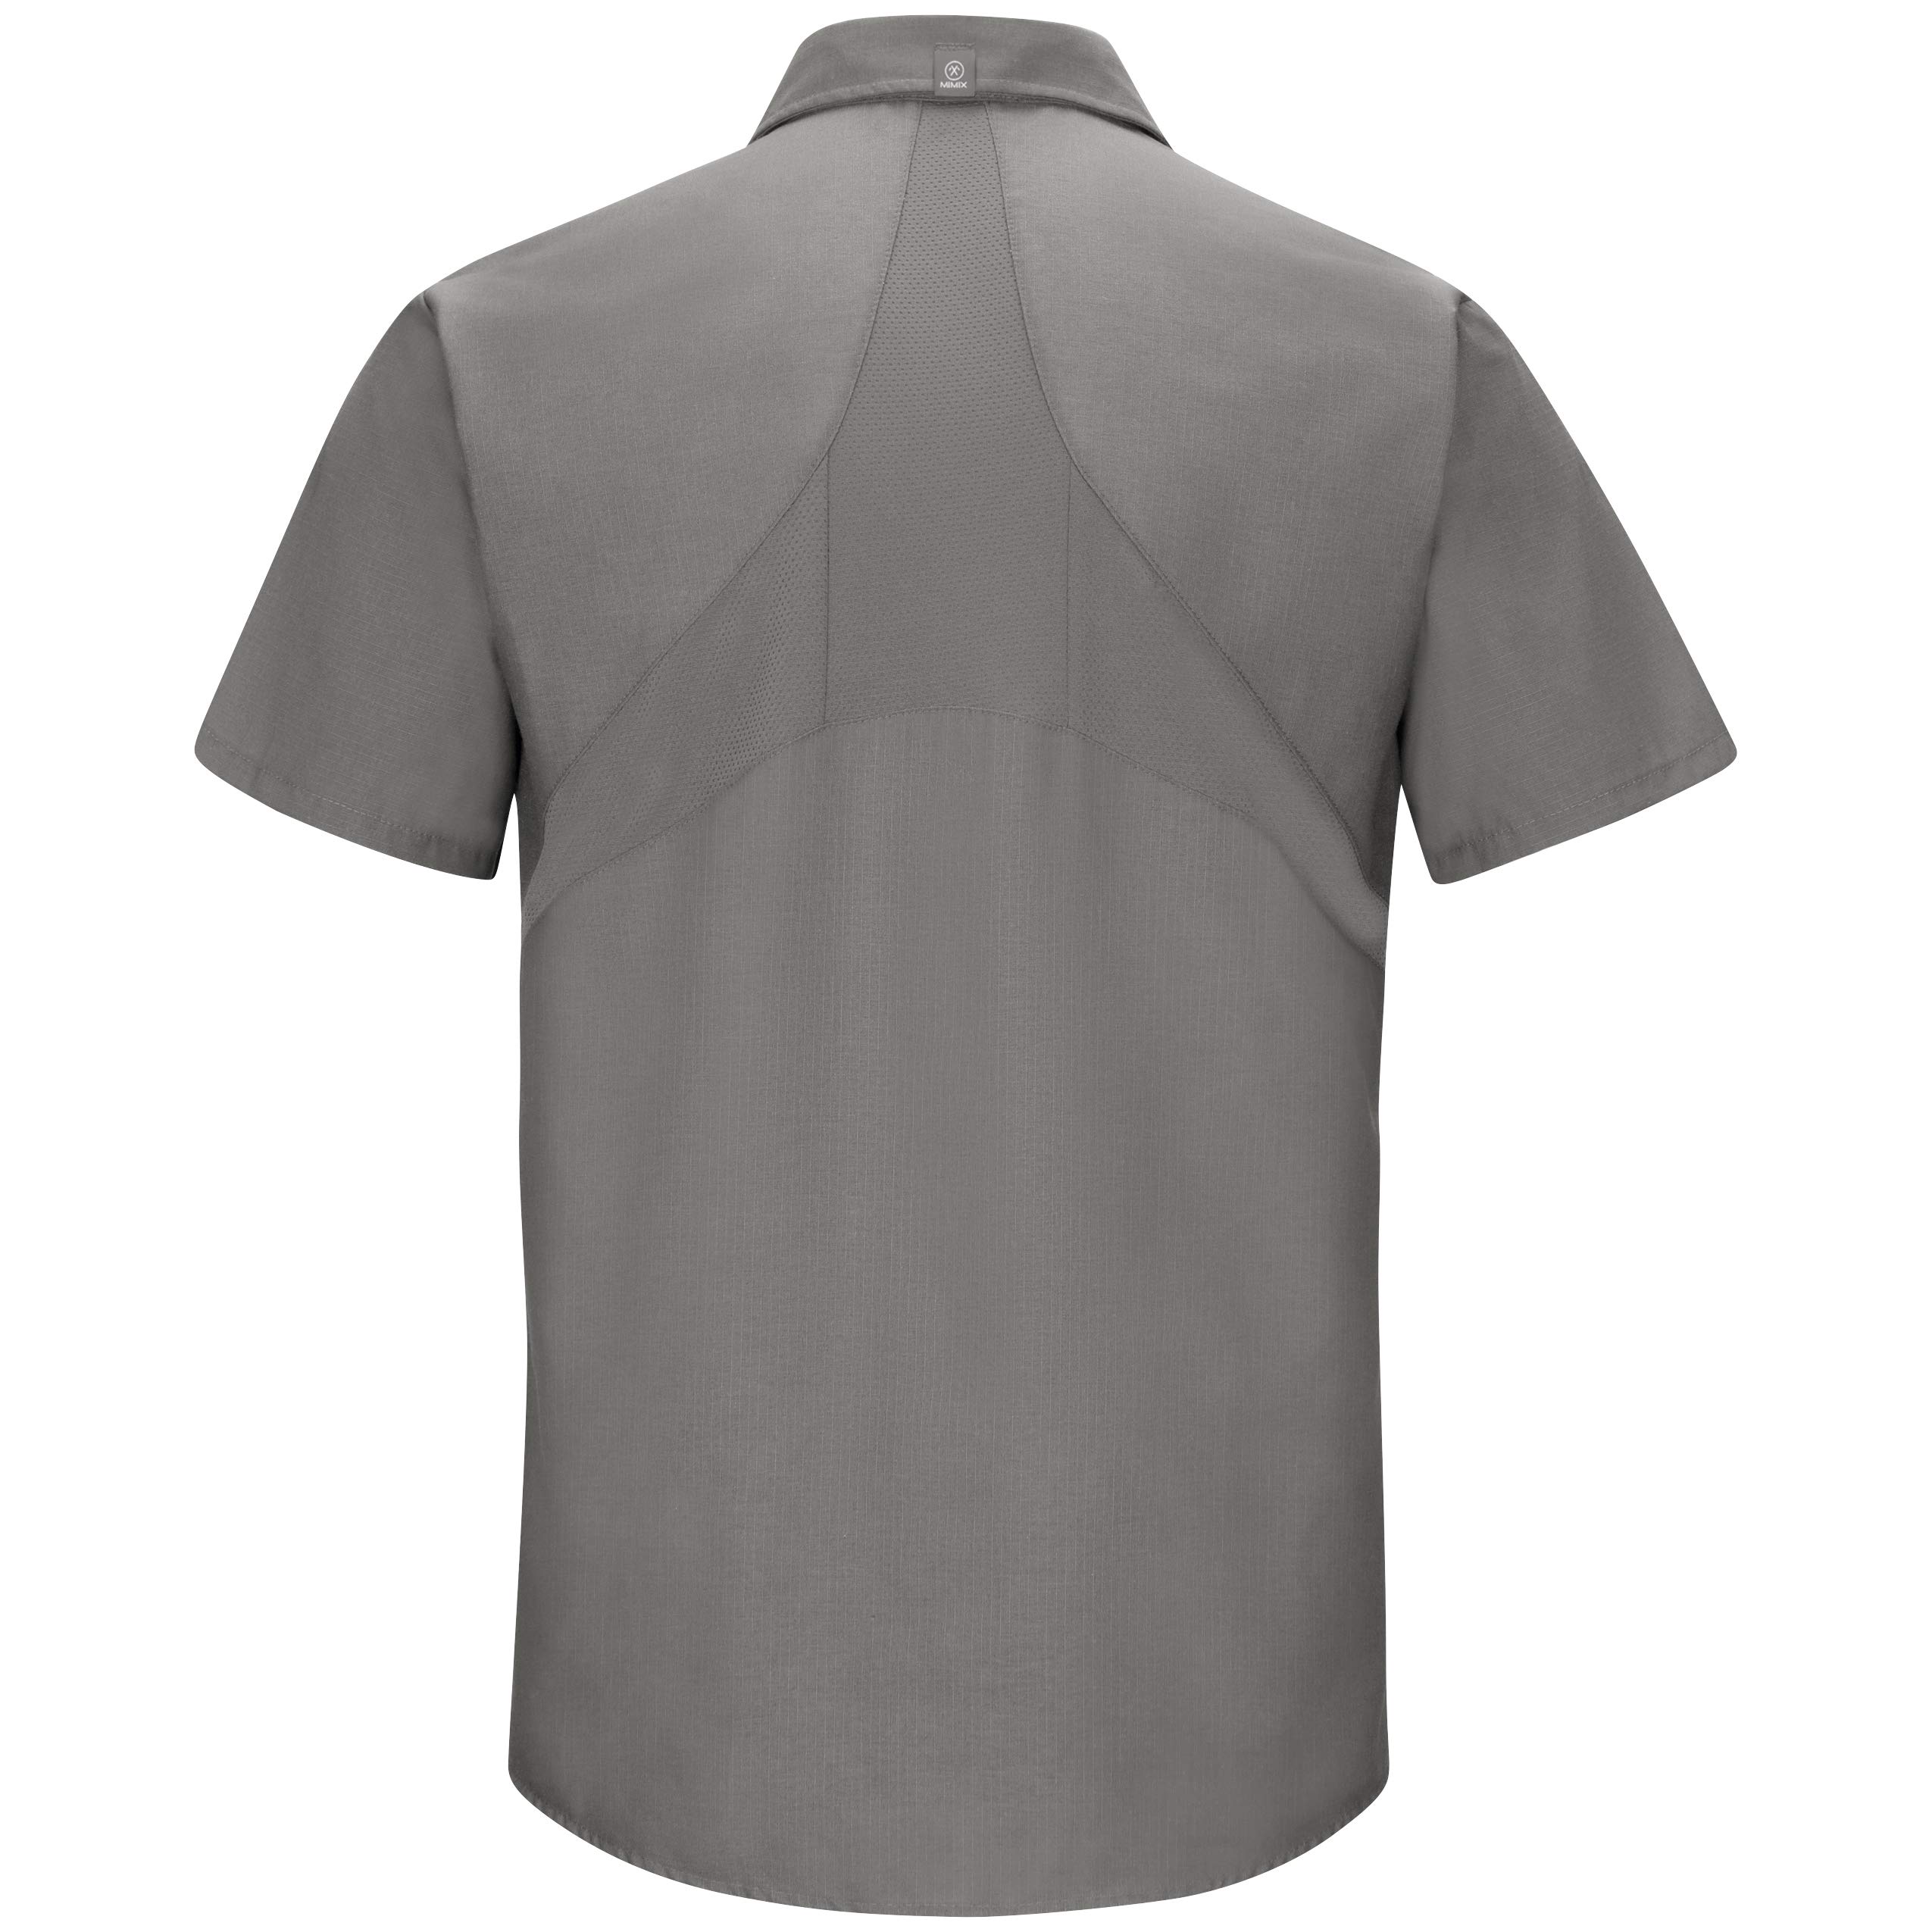 Red Kap Men's Short Sleeve Work Shirt with Mimix